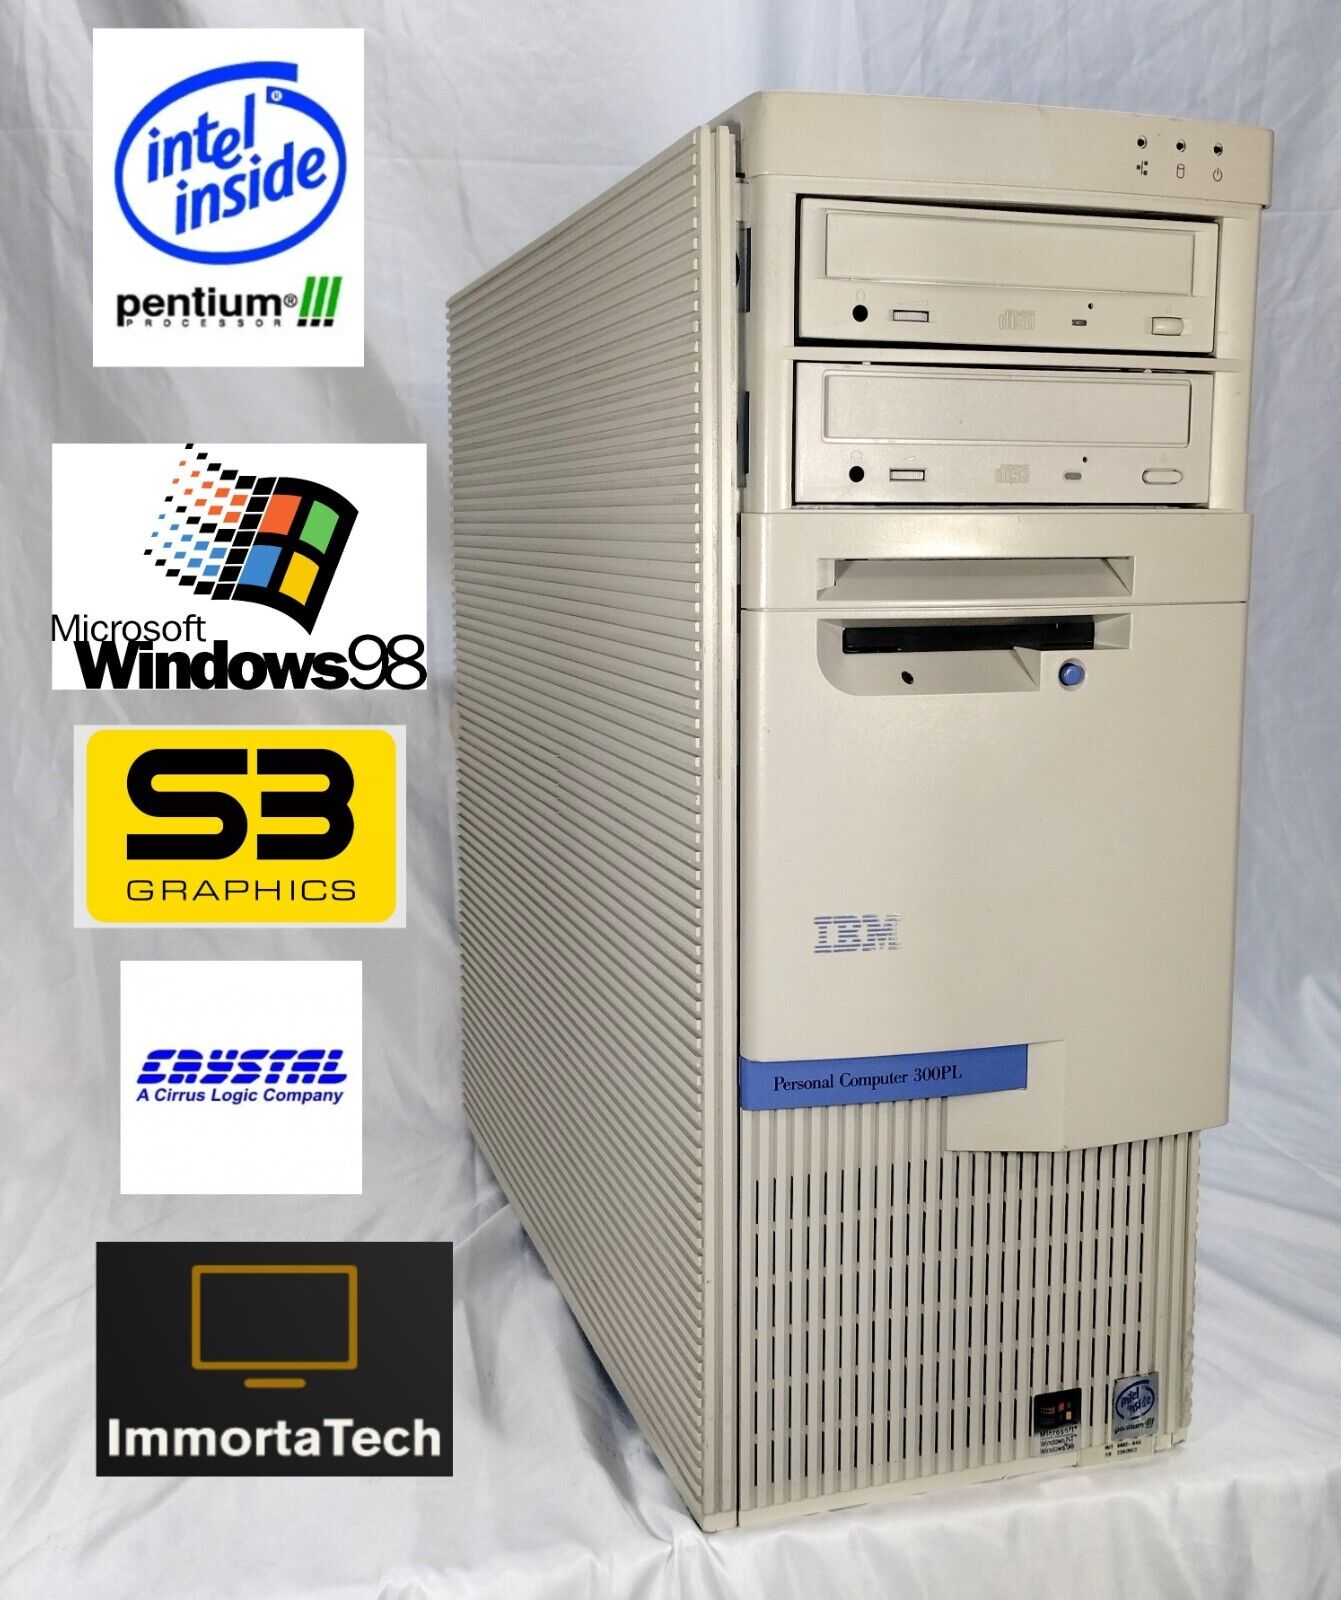 Vintage Windows 98 SE IBM Desktop - Pentium III, S3 Trio 3D, 500GB HD, RESTORED